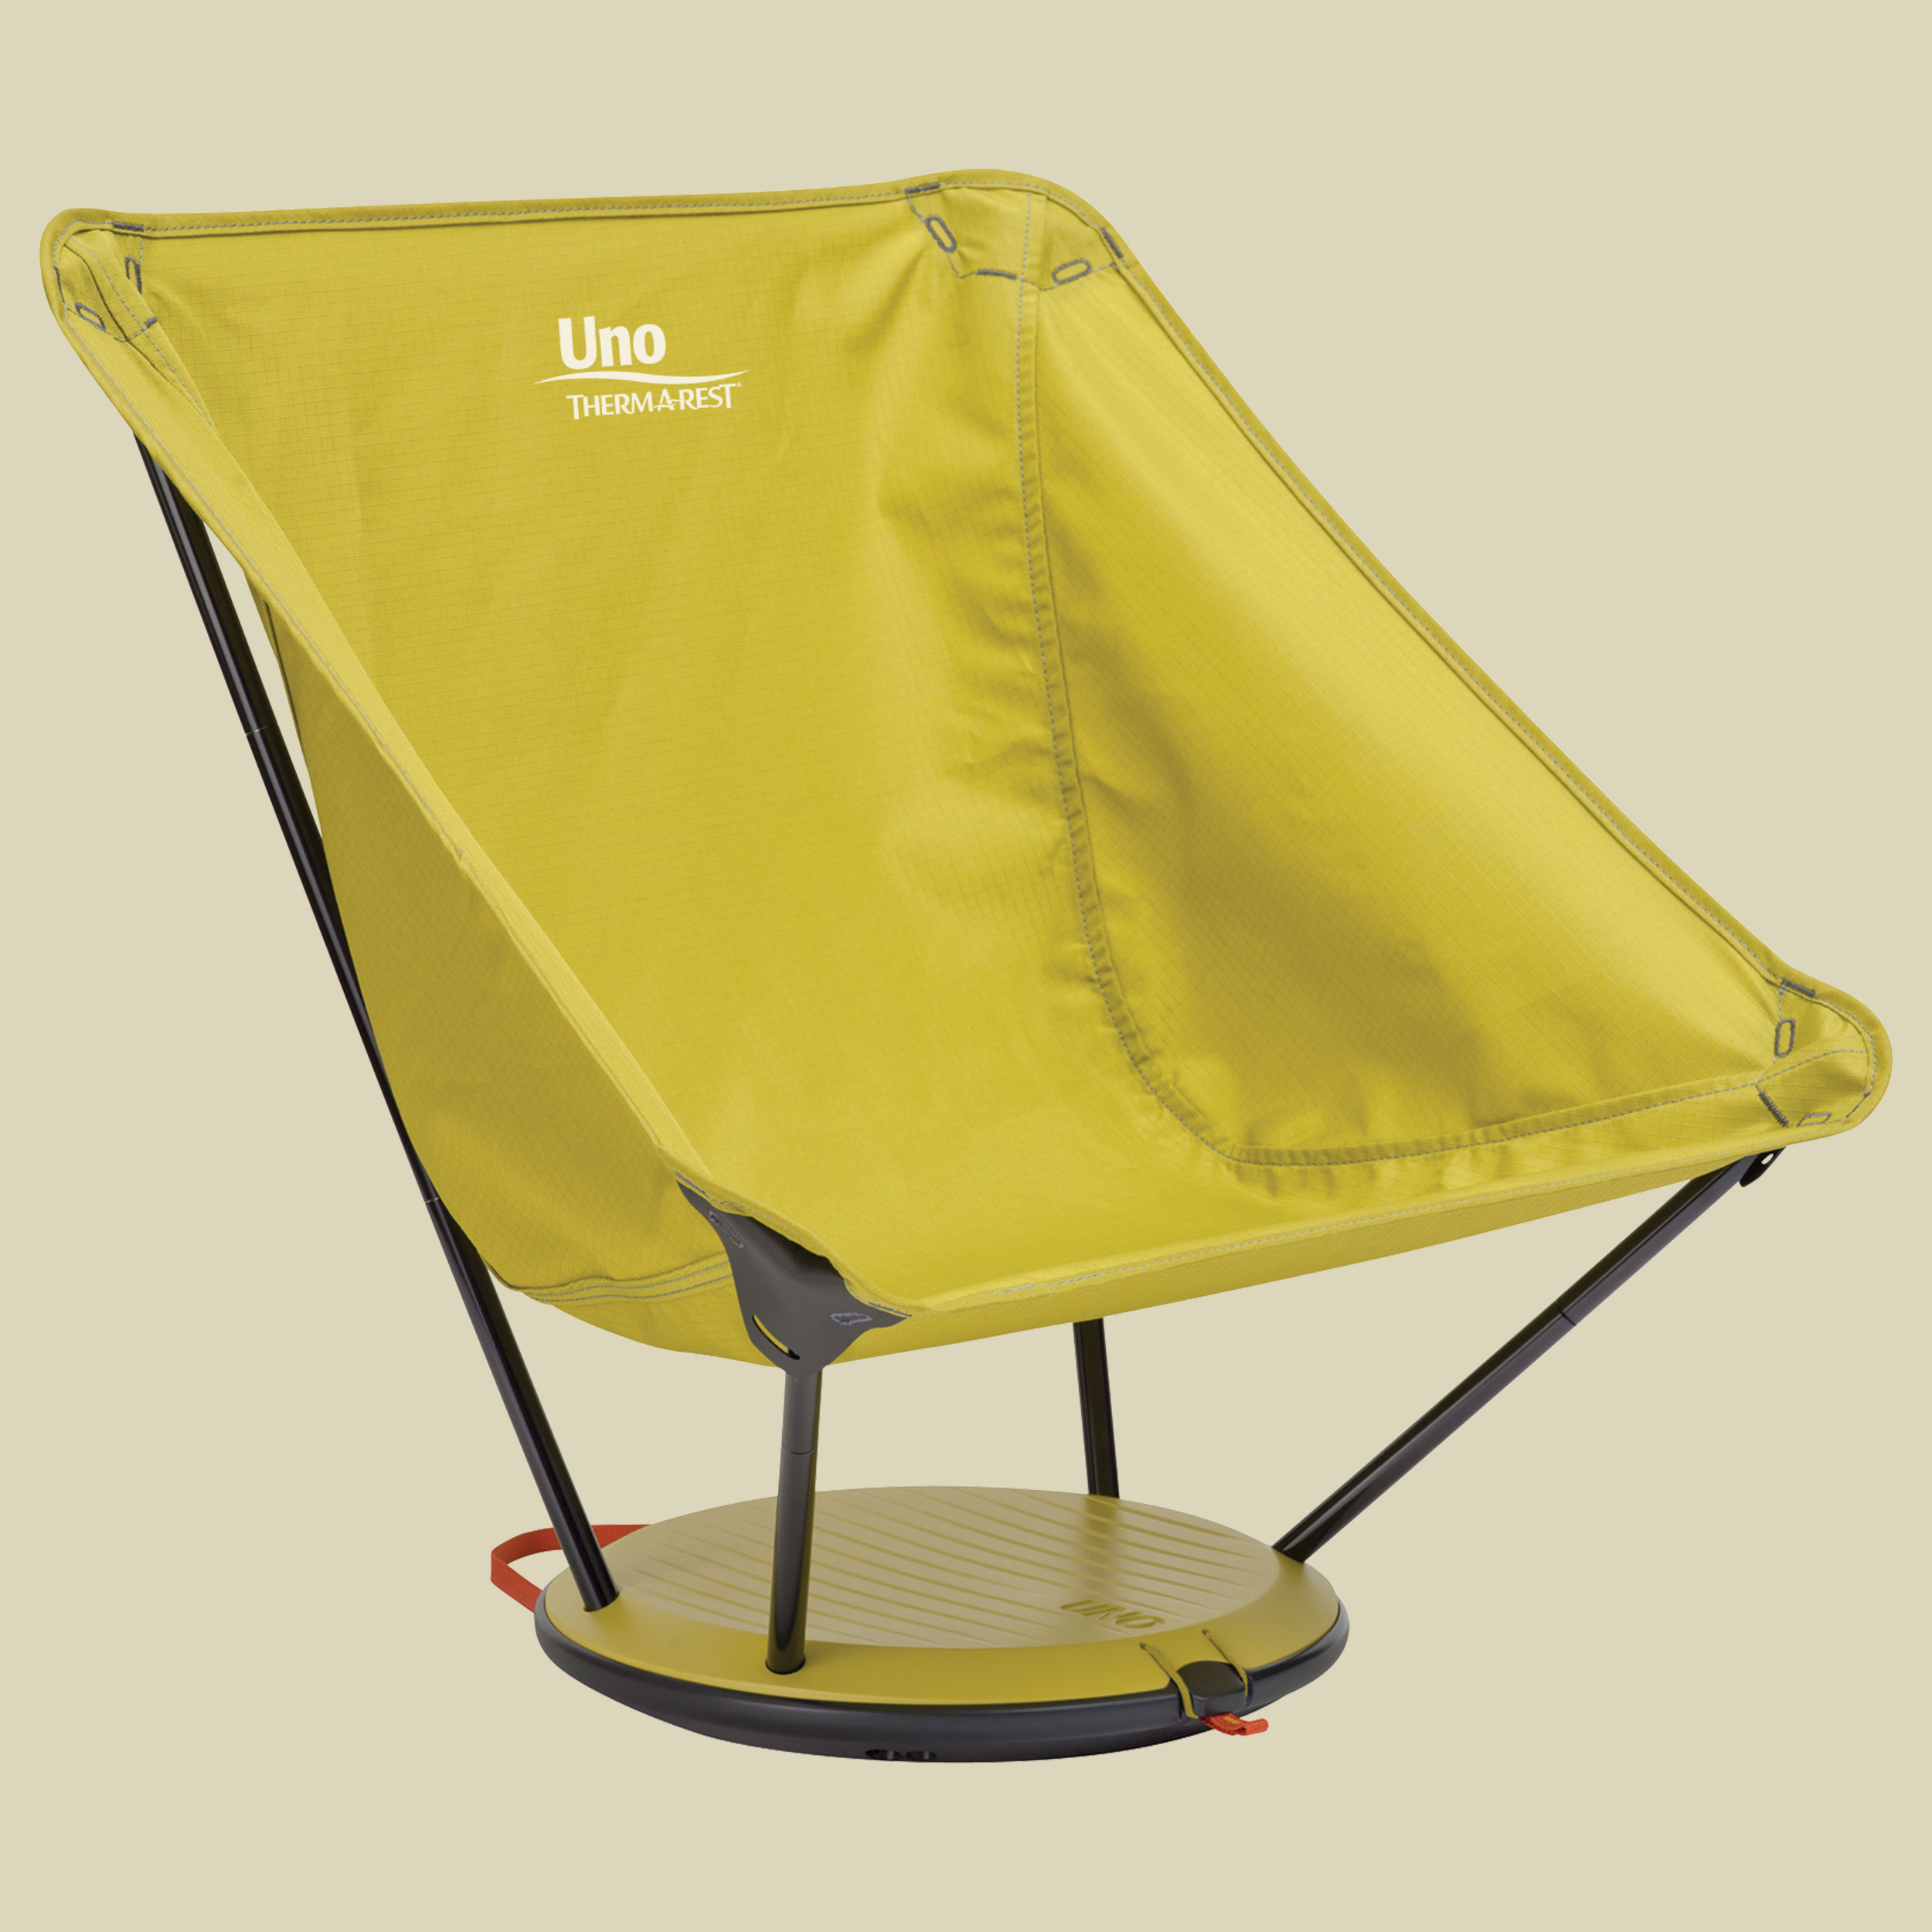 Uno Chair Größe one size Farbe citron